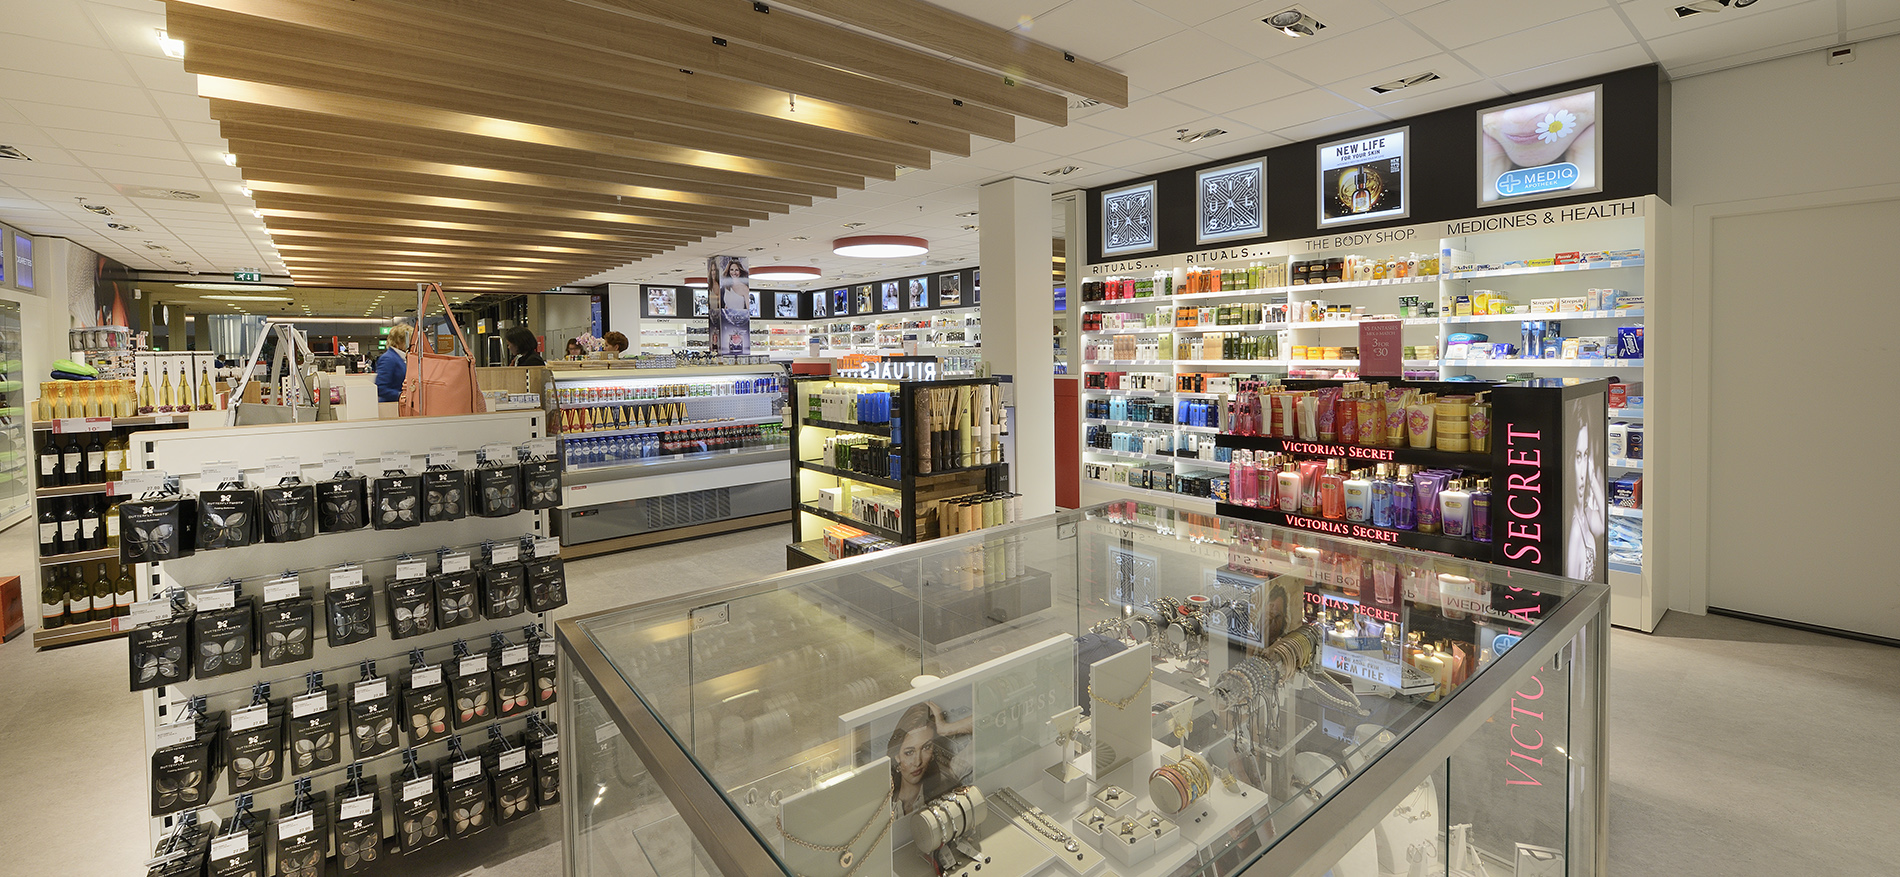 B&S Crewshop Airport Schiphol (NL) – Retail design and shopfitting - Retail design